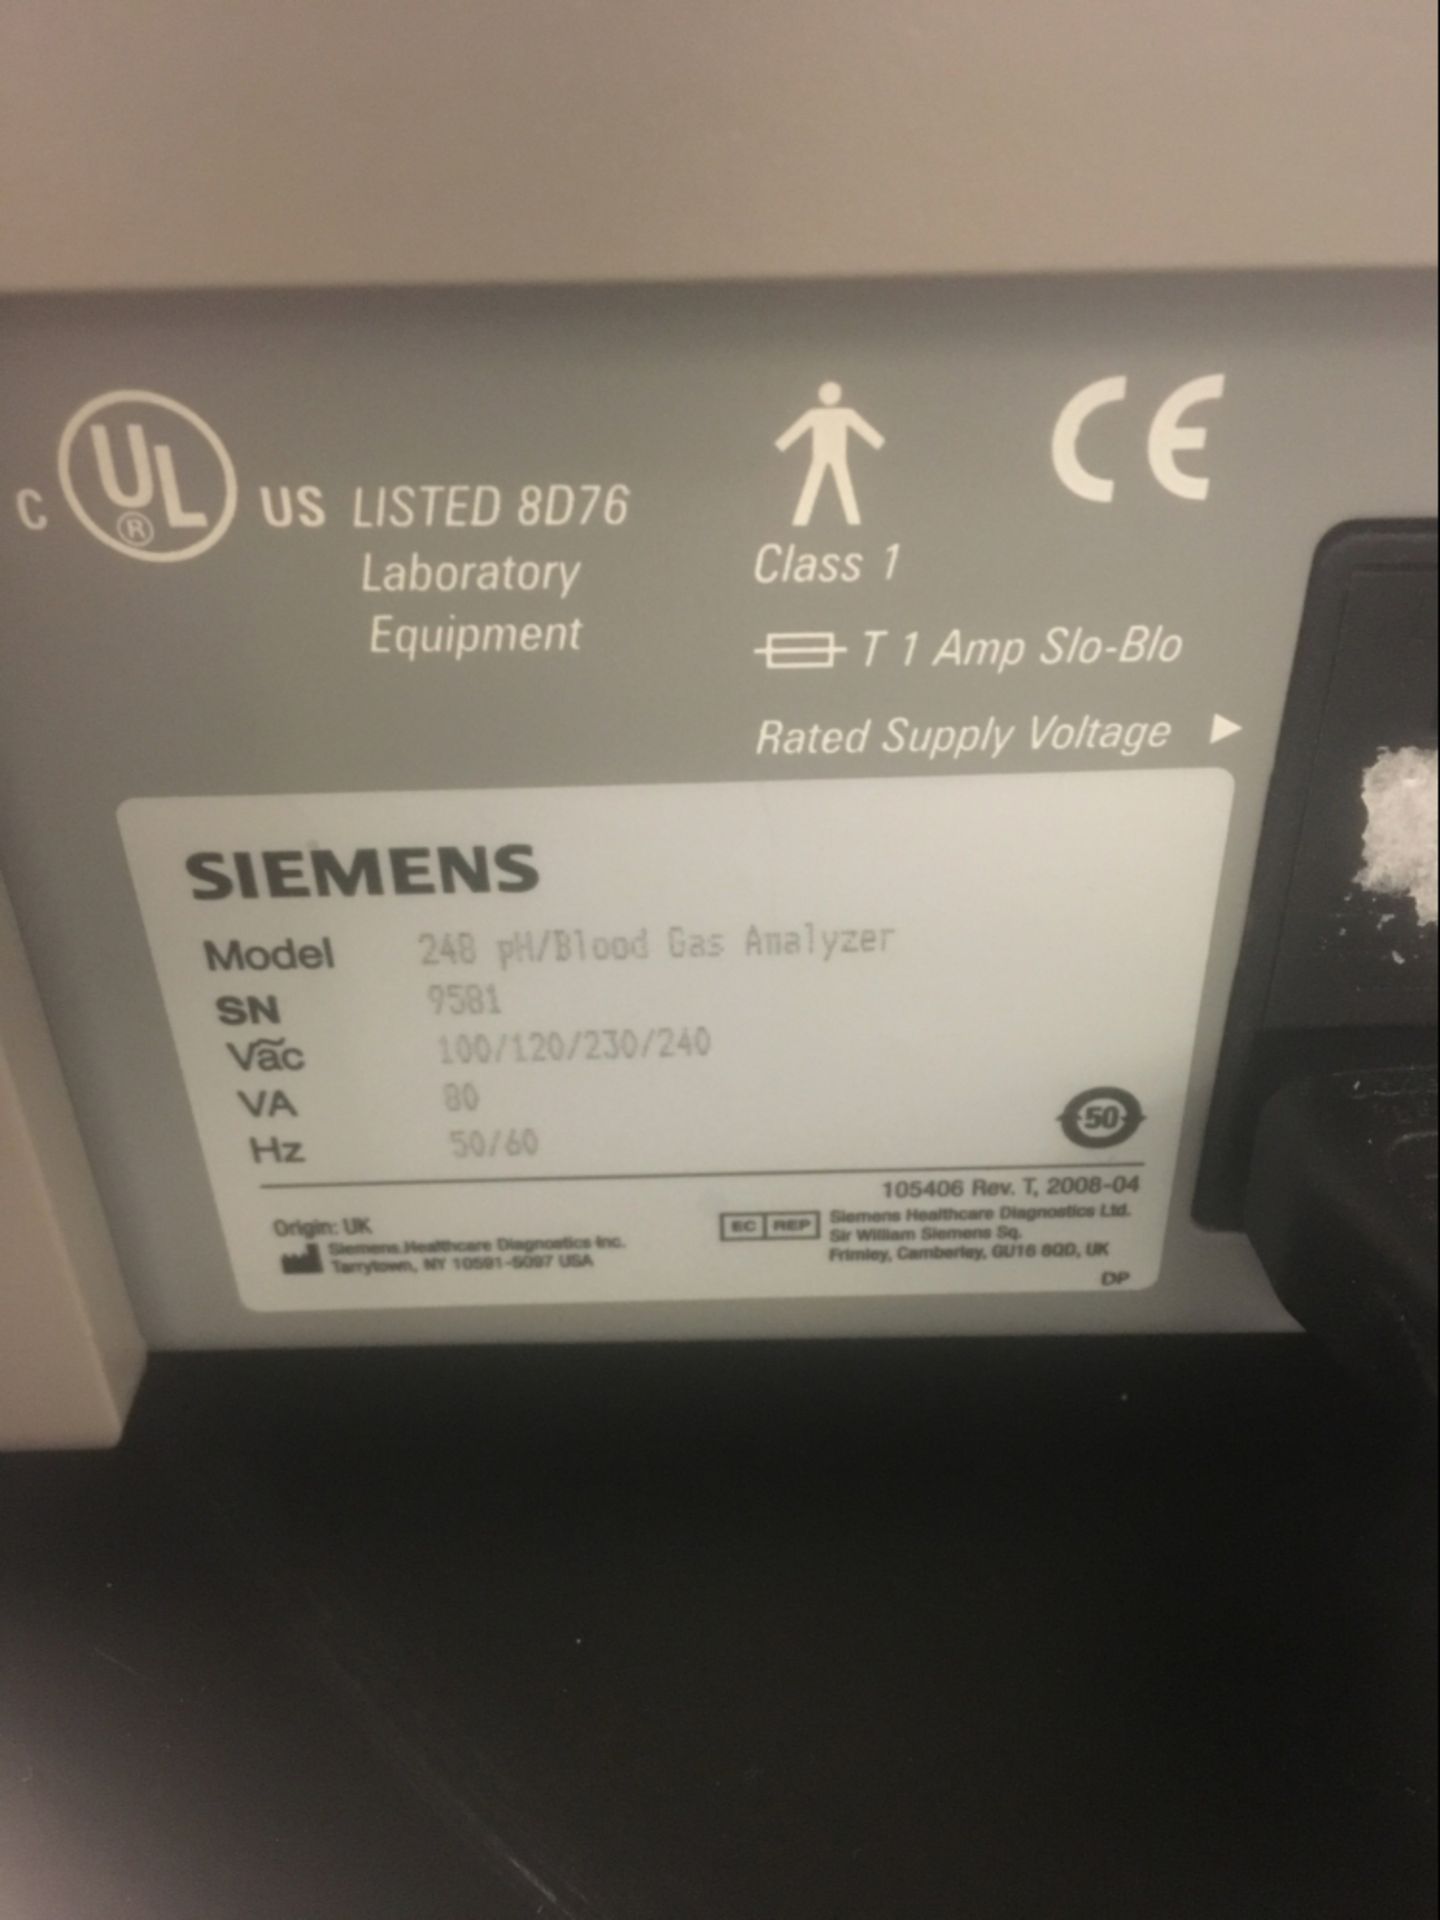 Siemens 248 pH/Blood Gas Analyzer - Image 2 of 2